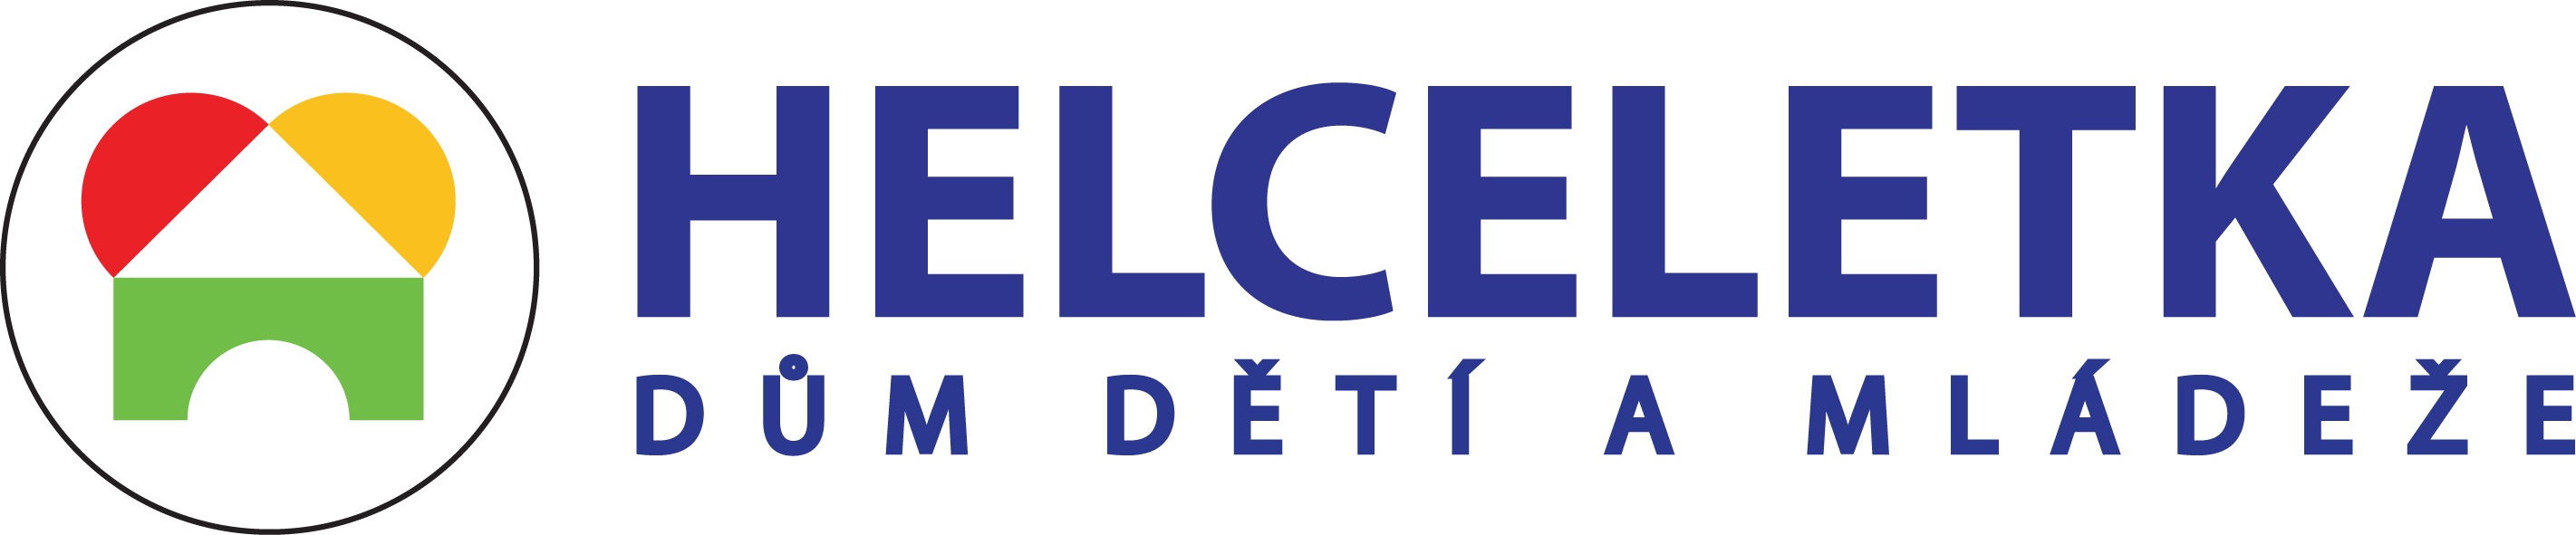 helceletka_logo.png